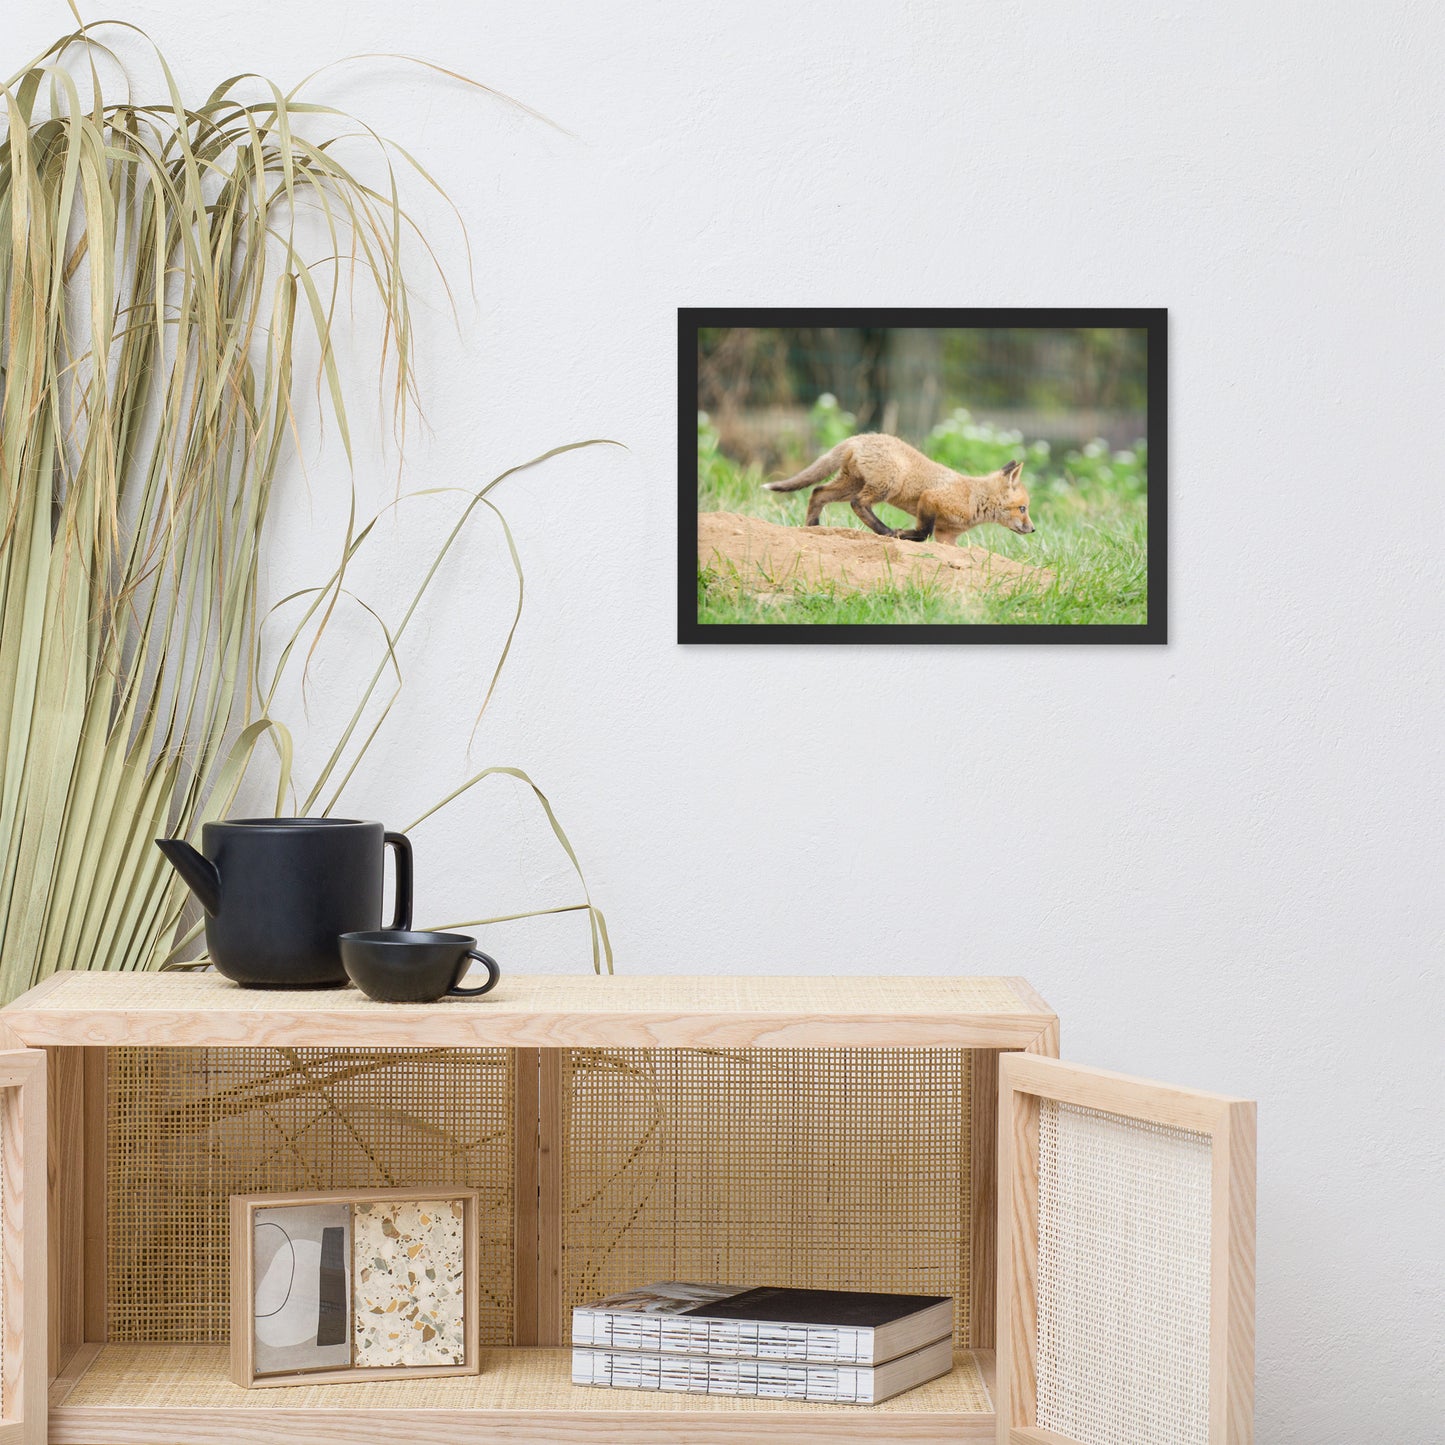 Wall Hanging Nursery Decor: Baby Fox Pup In Meadow - Animal / Wildlife / Nature Artwork - Wall Decor - Framed Wall Art Print